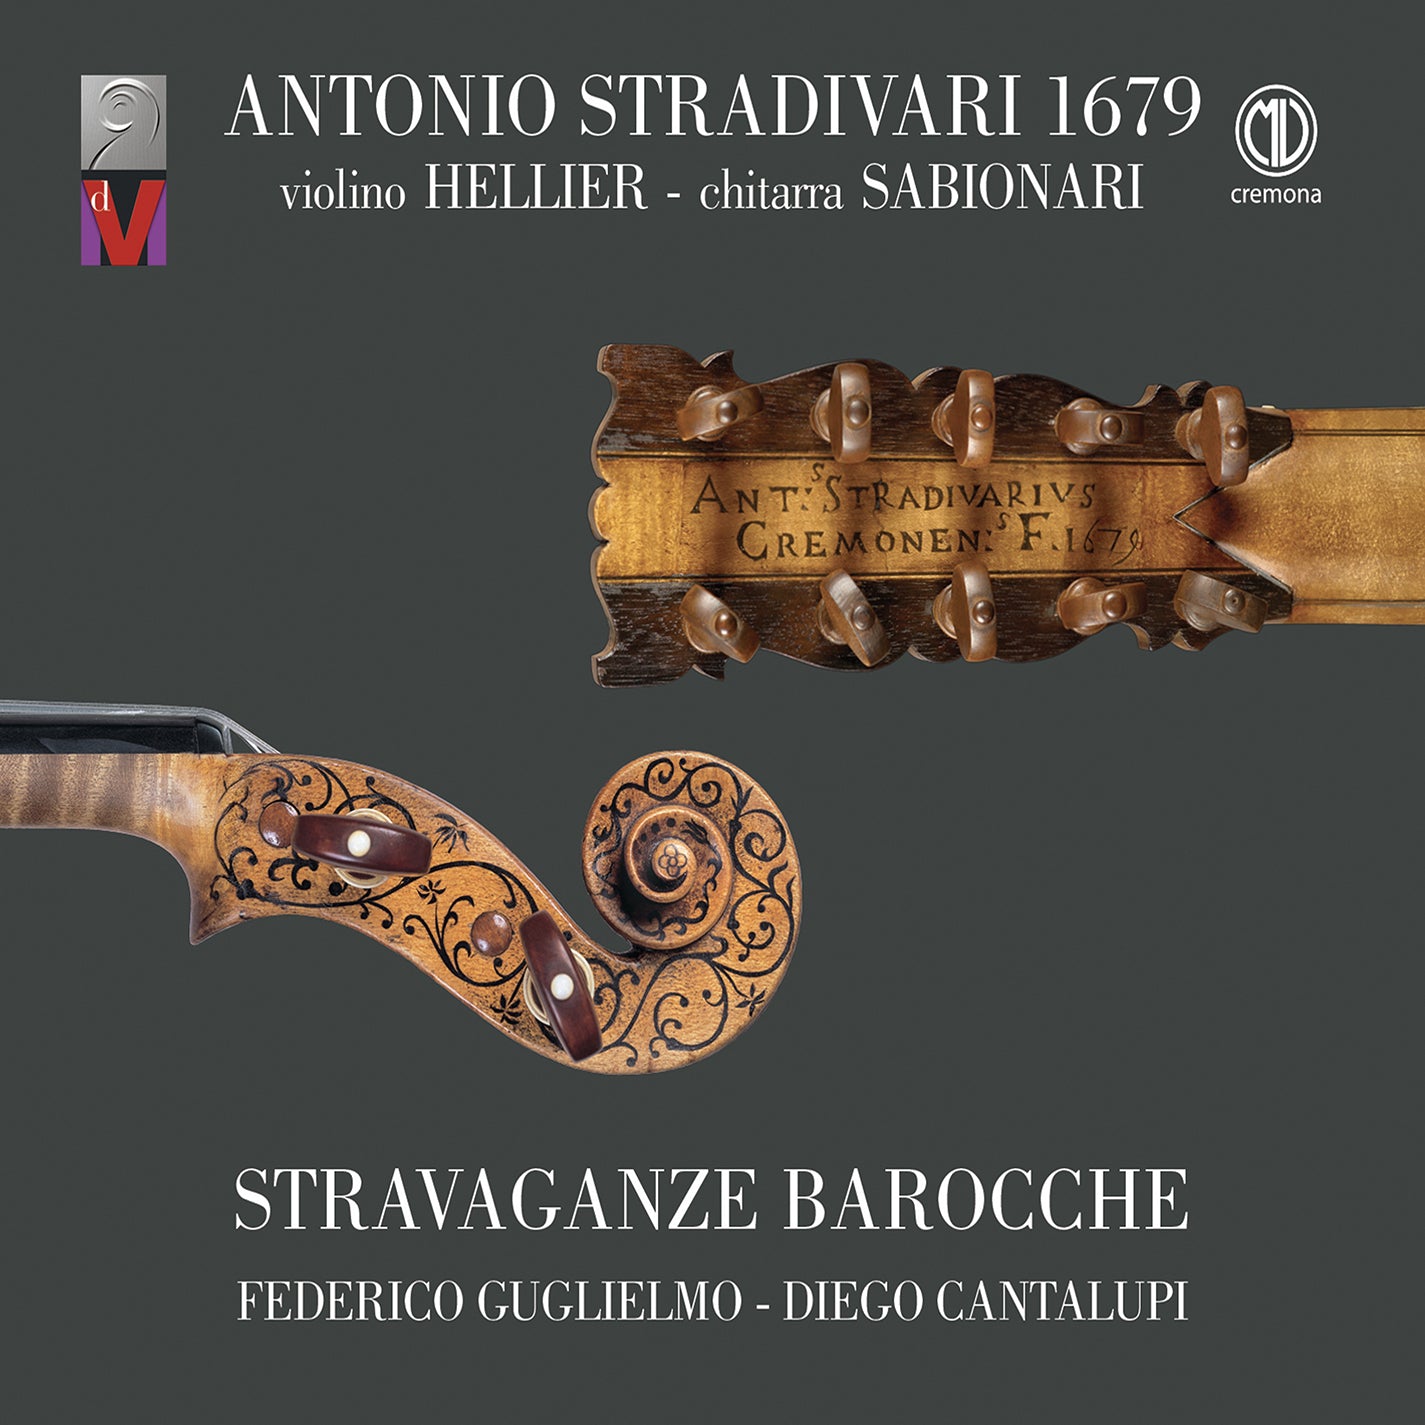 Antonio Stradivari 1679 - Baroque Music on Stradivari Instruments / Stravaganze Barocche